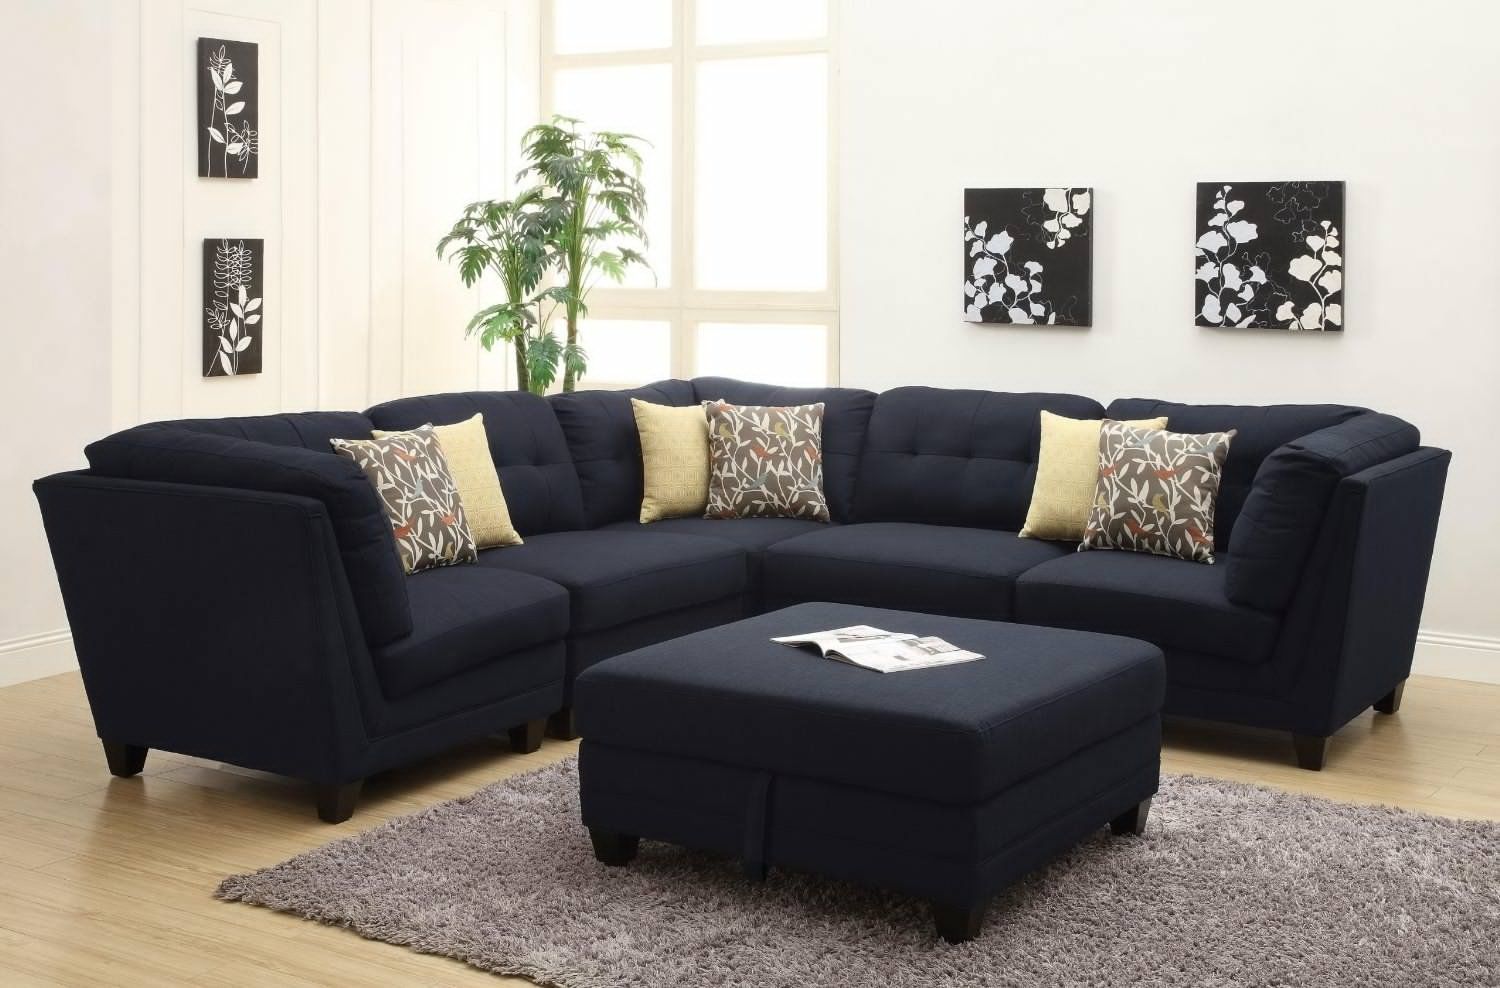 Comfortable Sectional Sofas Chaise Hereo Sofa In Comfortable Sectional Sofa (View 8 of 15)